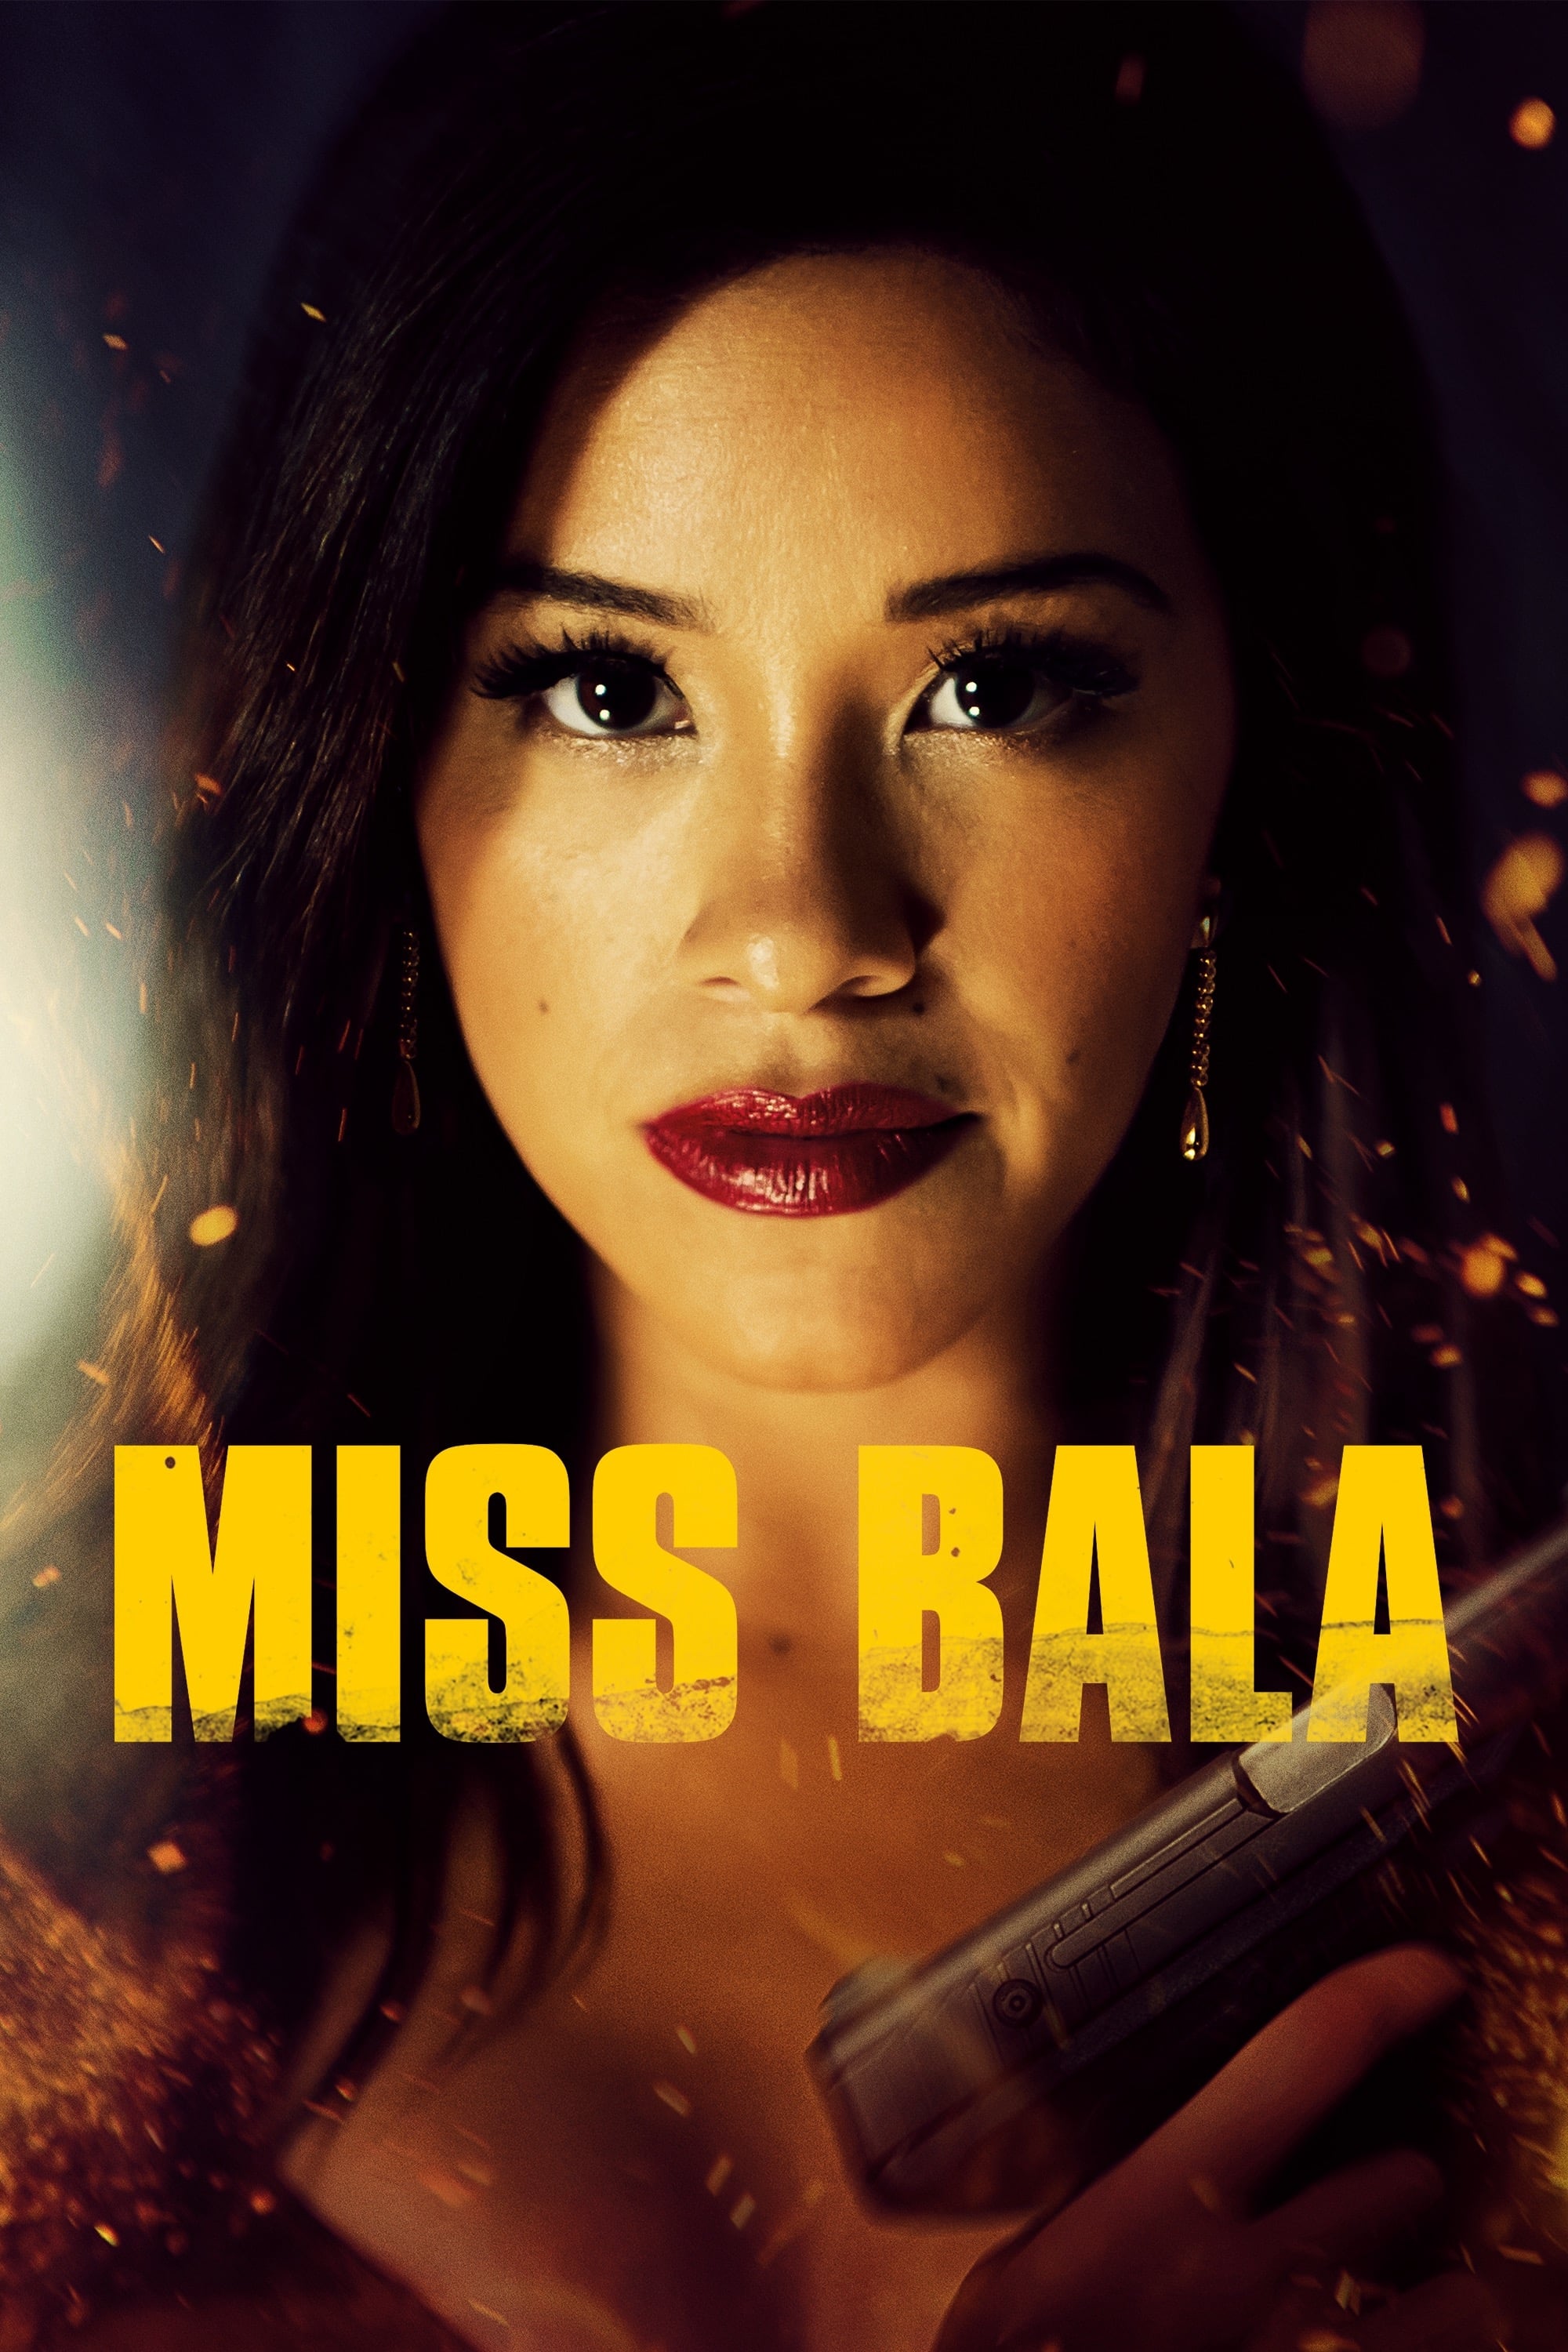 Affiche du film "Miss Bala"